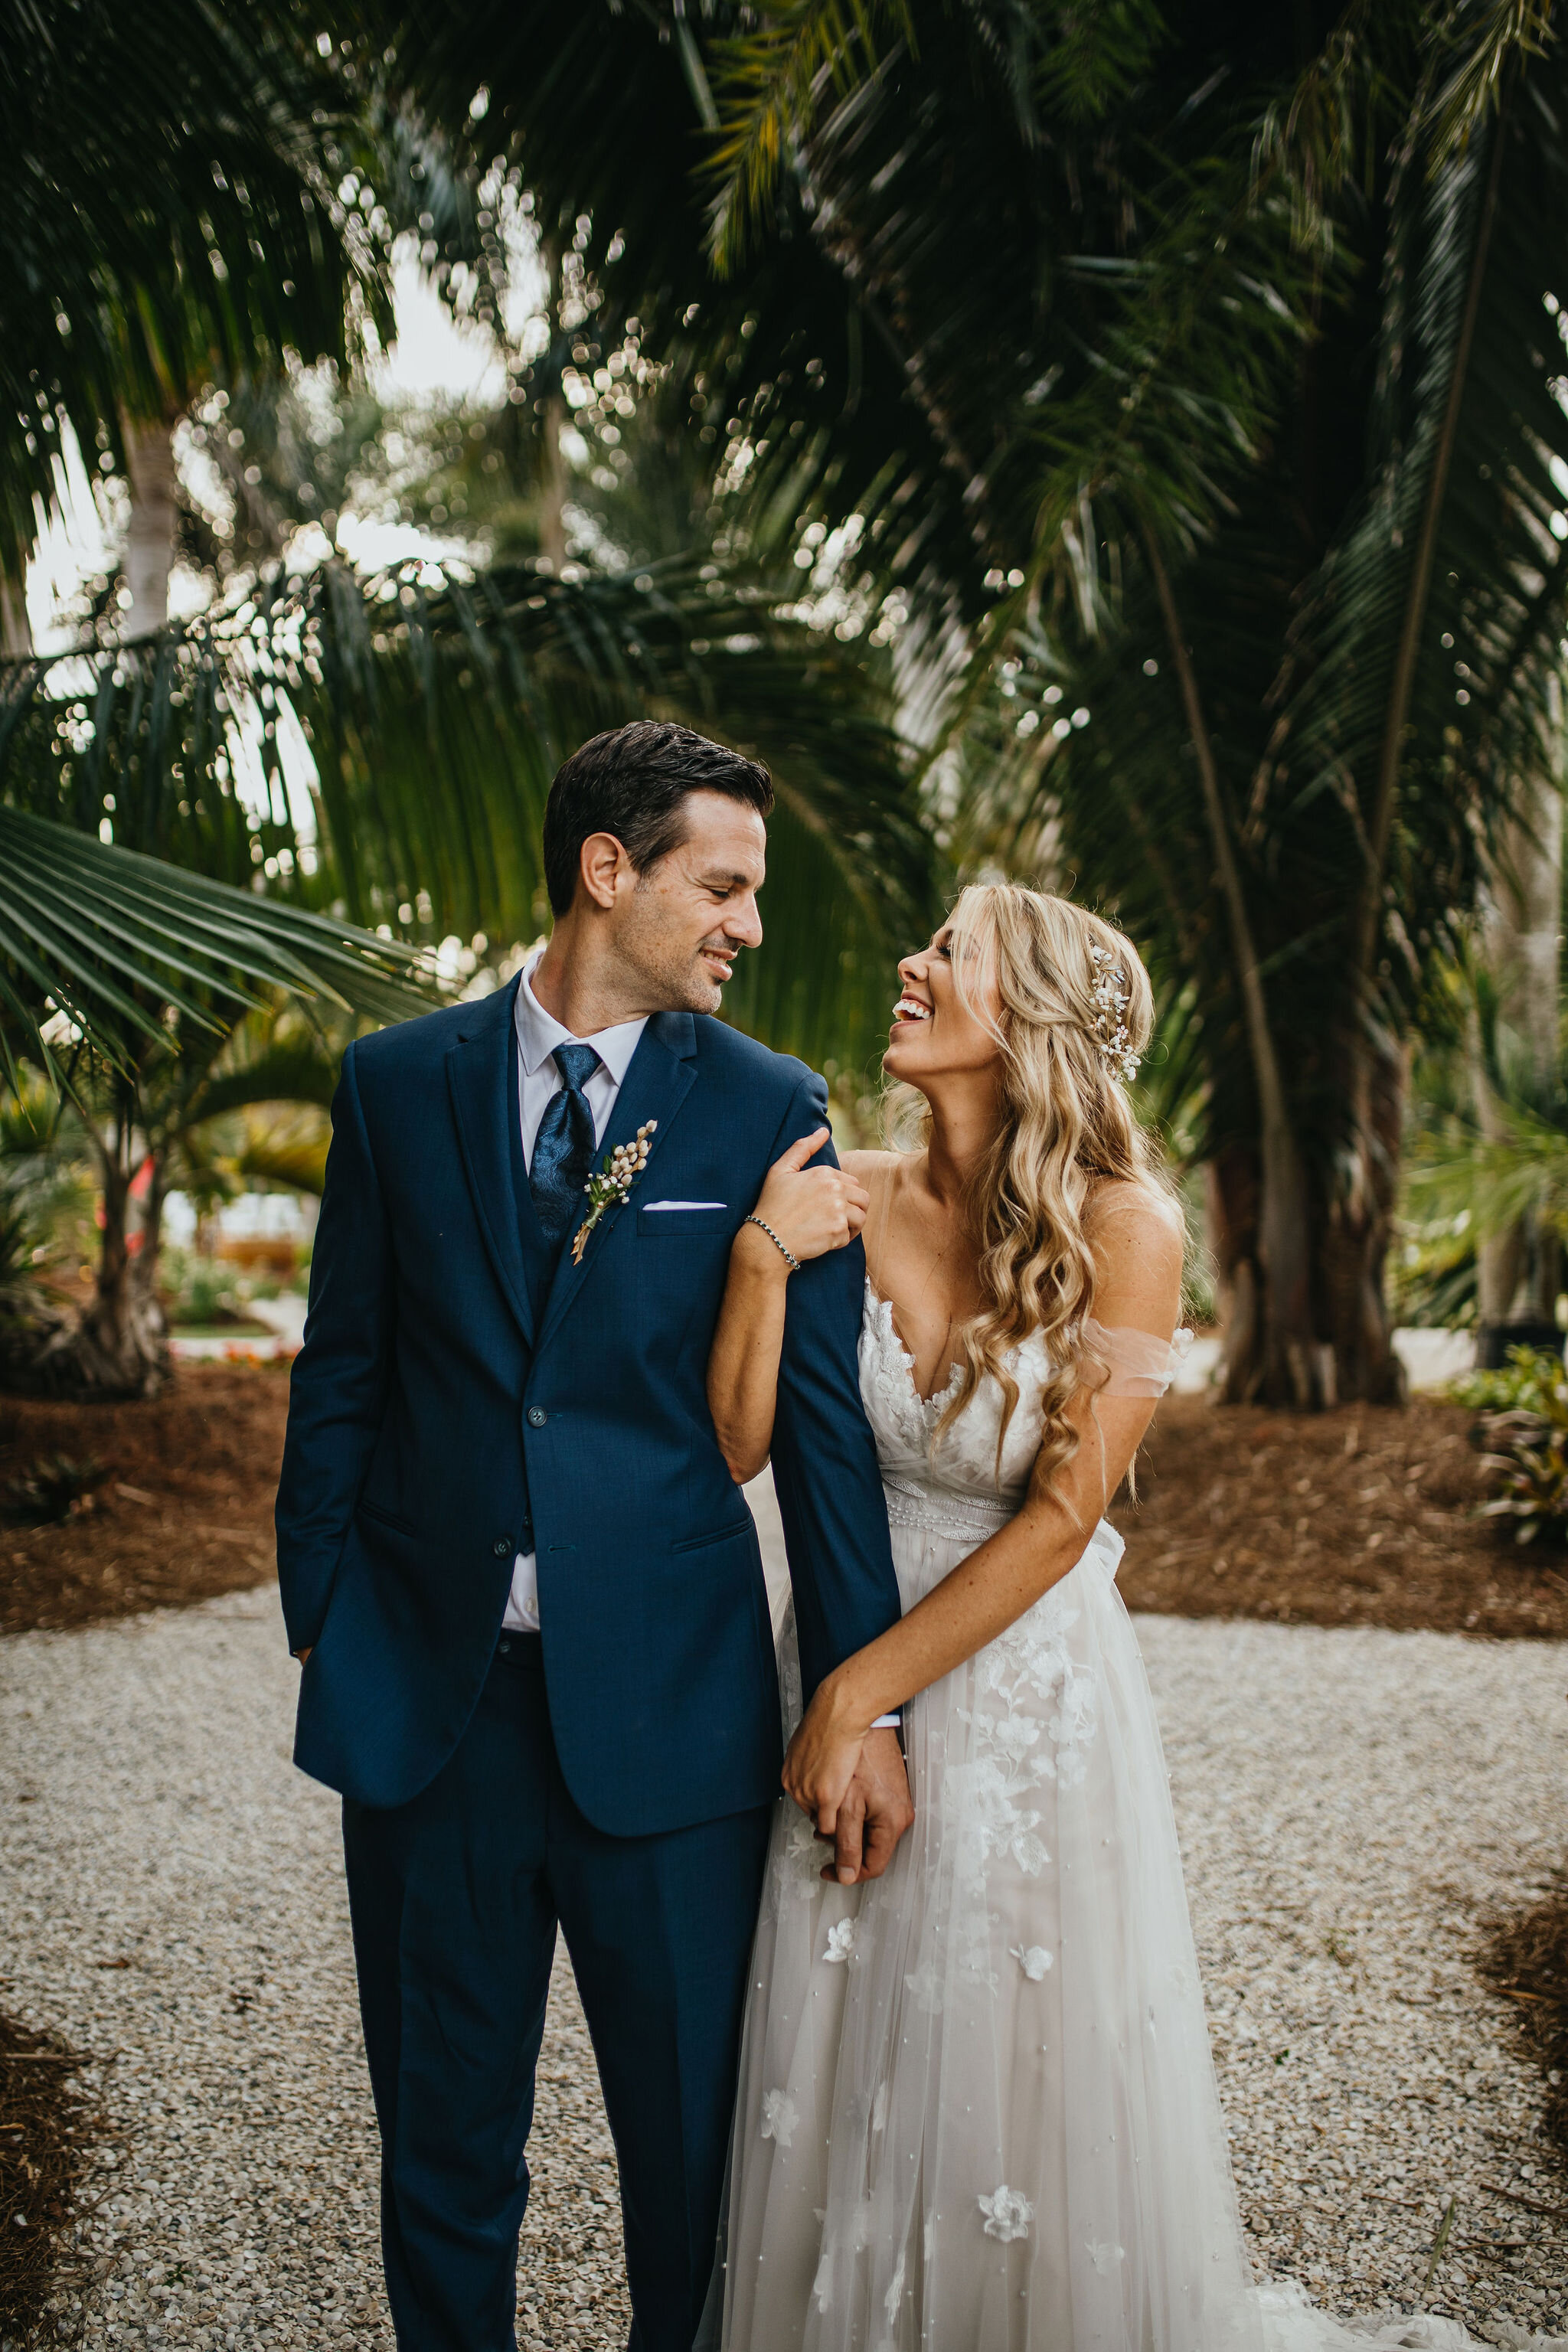 Sanibel Island, Florida Wedding Photo/Video team Christina &amp; Jeremiah